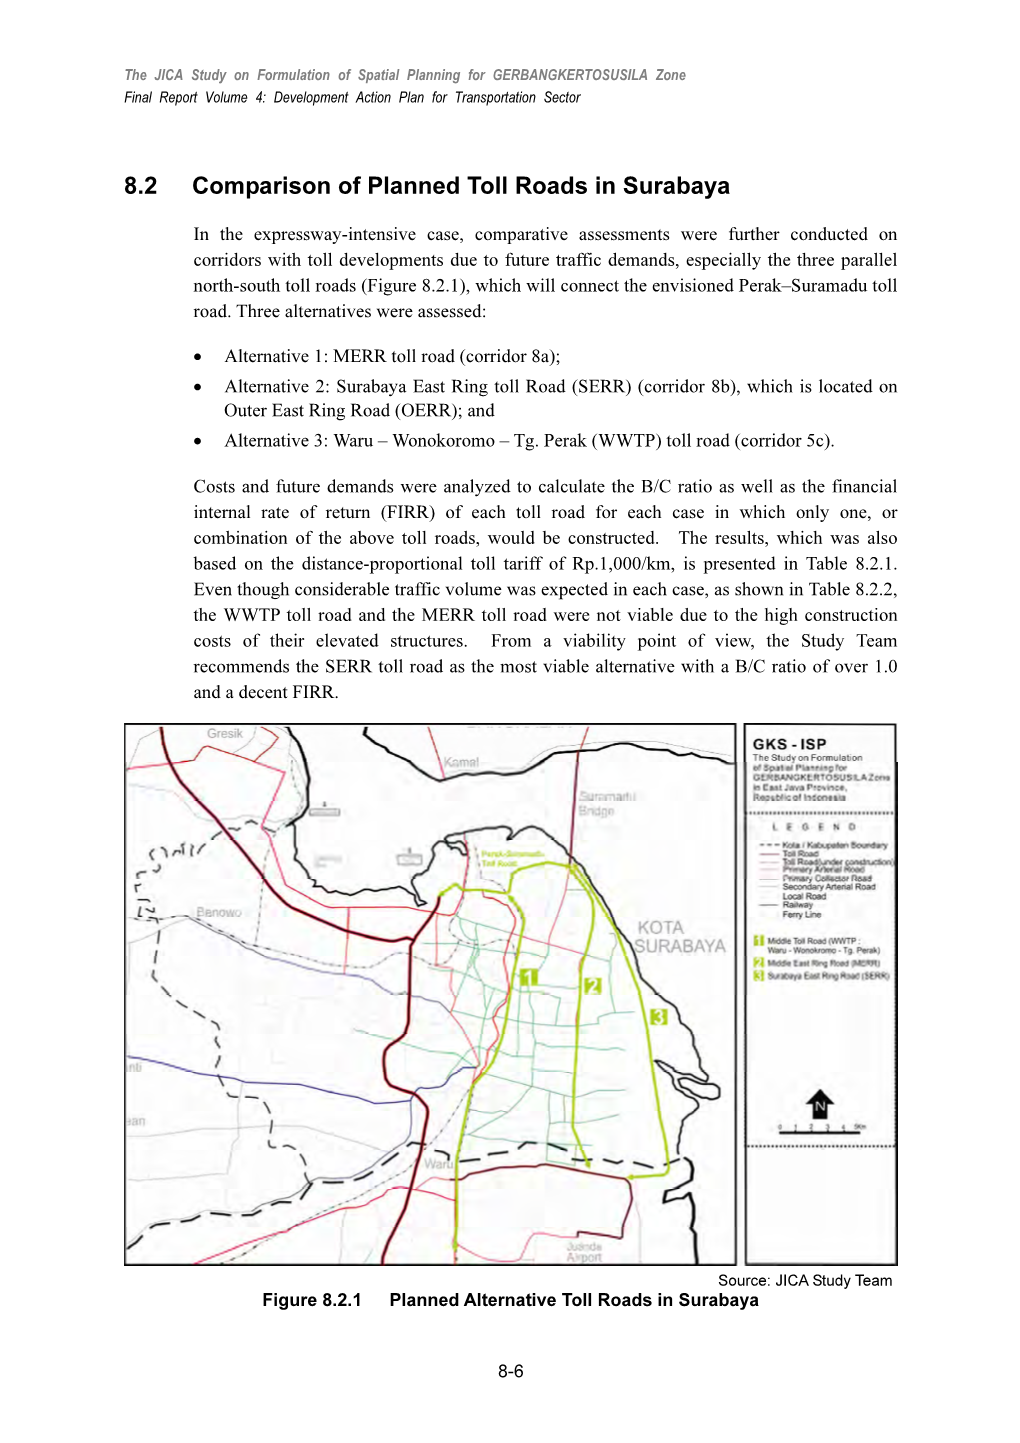 8.2 Comparison of Planned Toll Roads in Surabaya